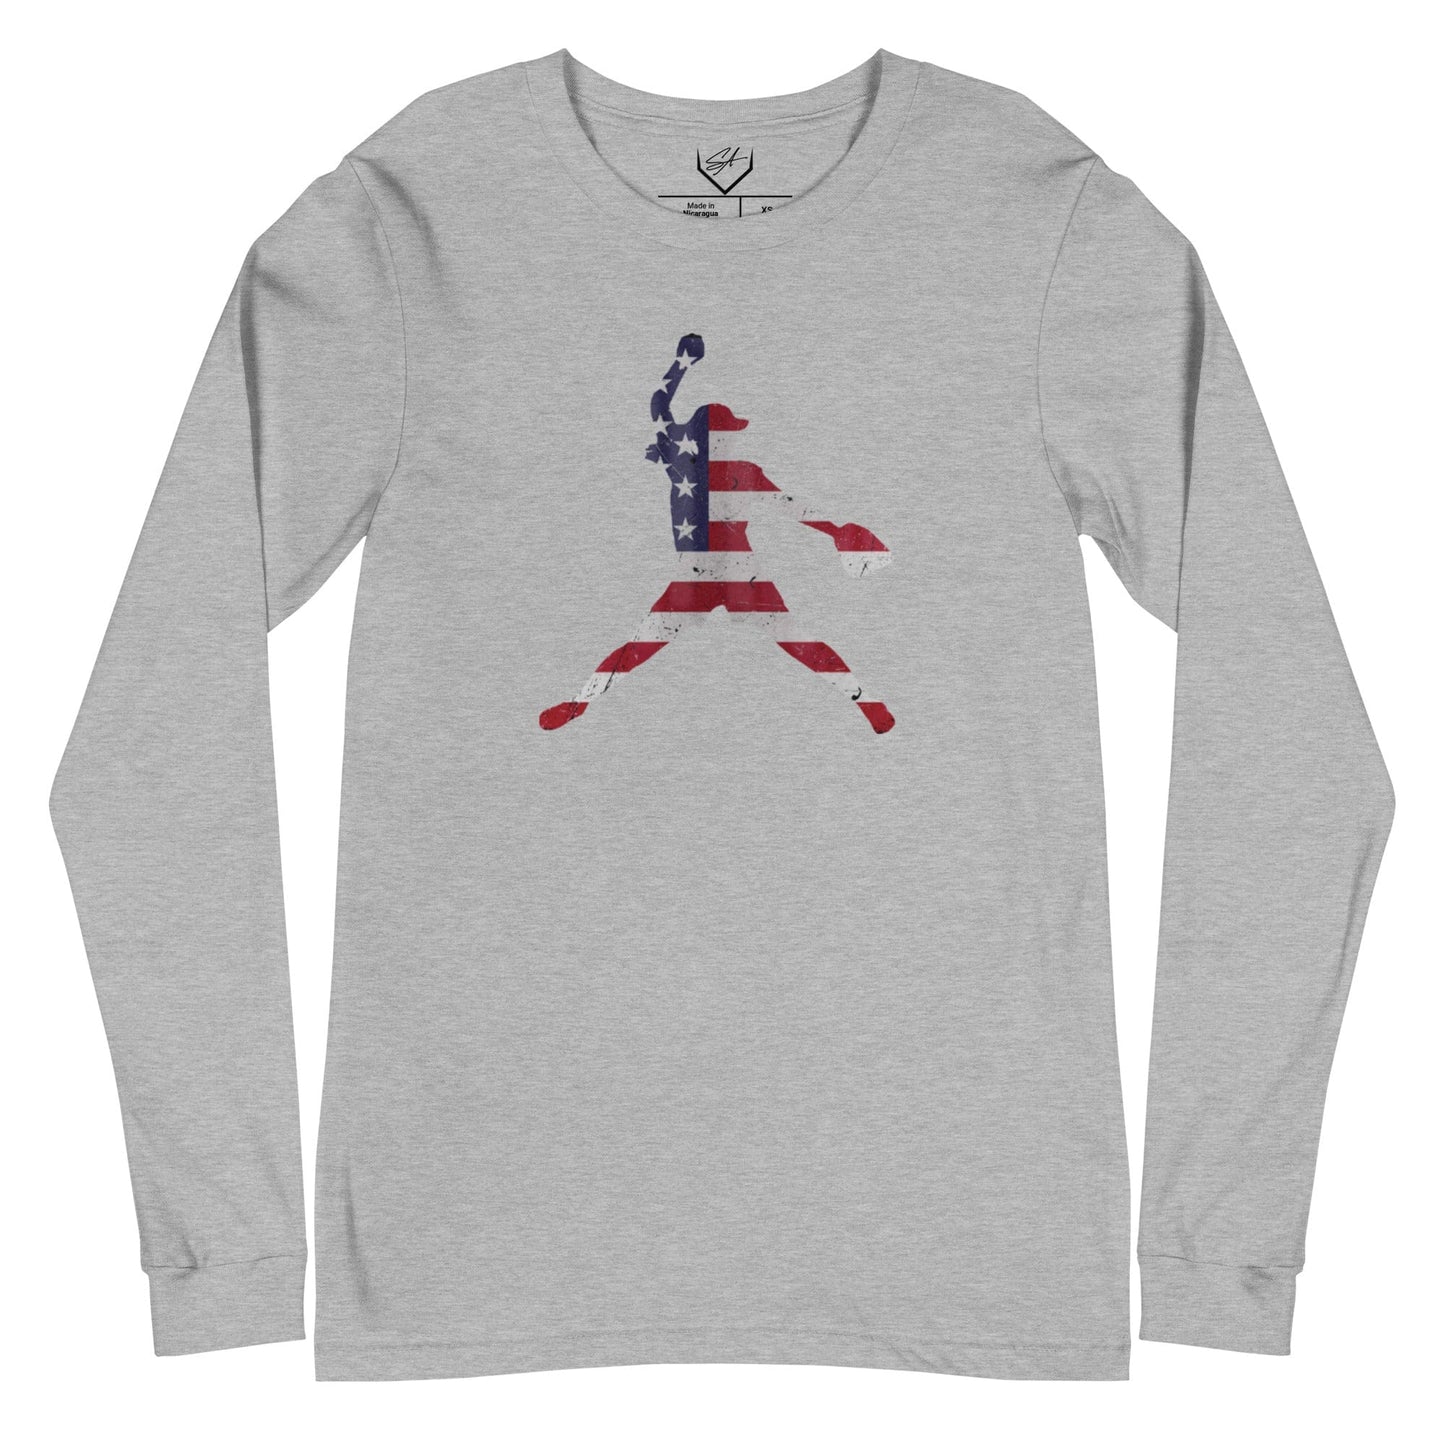 American Flag Softball Pitcher - Adult Long Sleeve